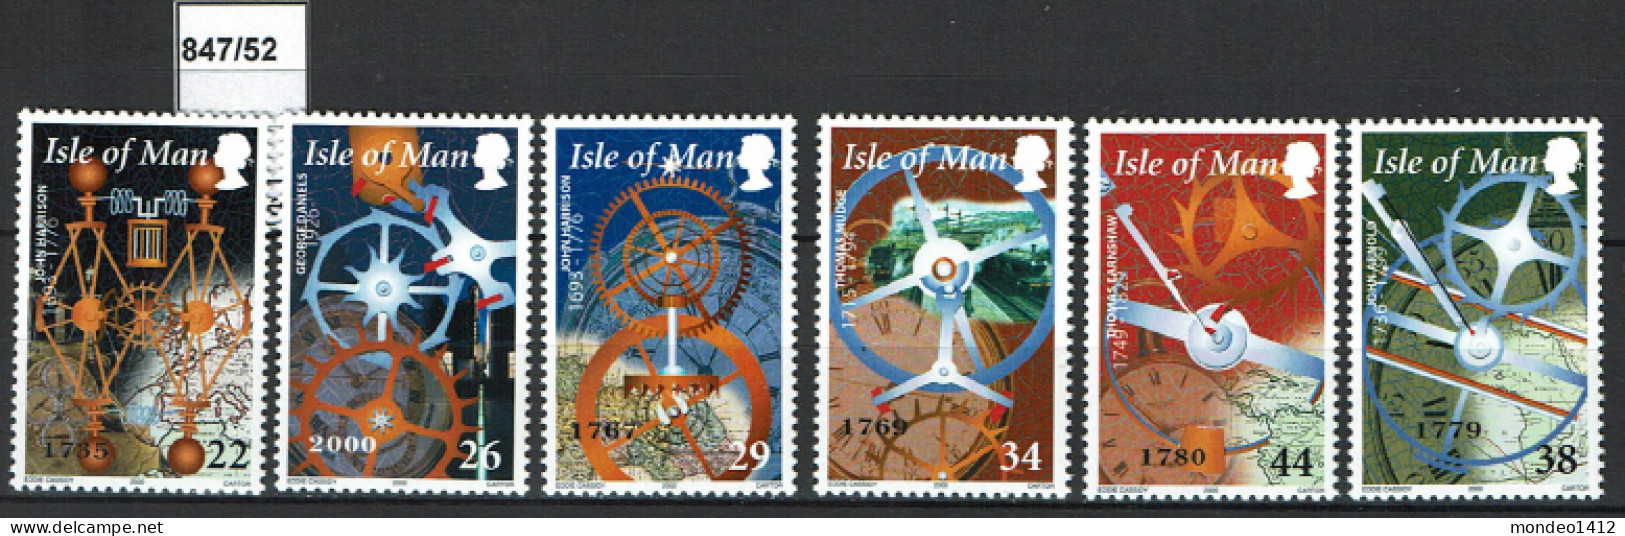 Isle Of Man - 2000 - MNH - Clocks, Horloges, Uurwerken - Detail Mechanisme - Man (Insel)